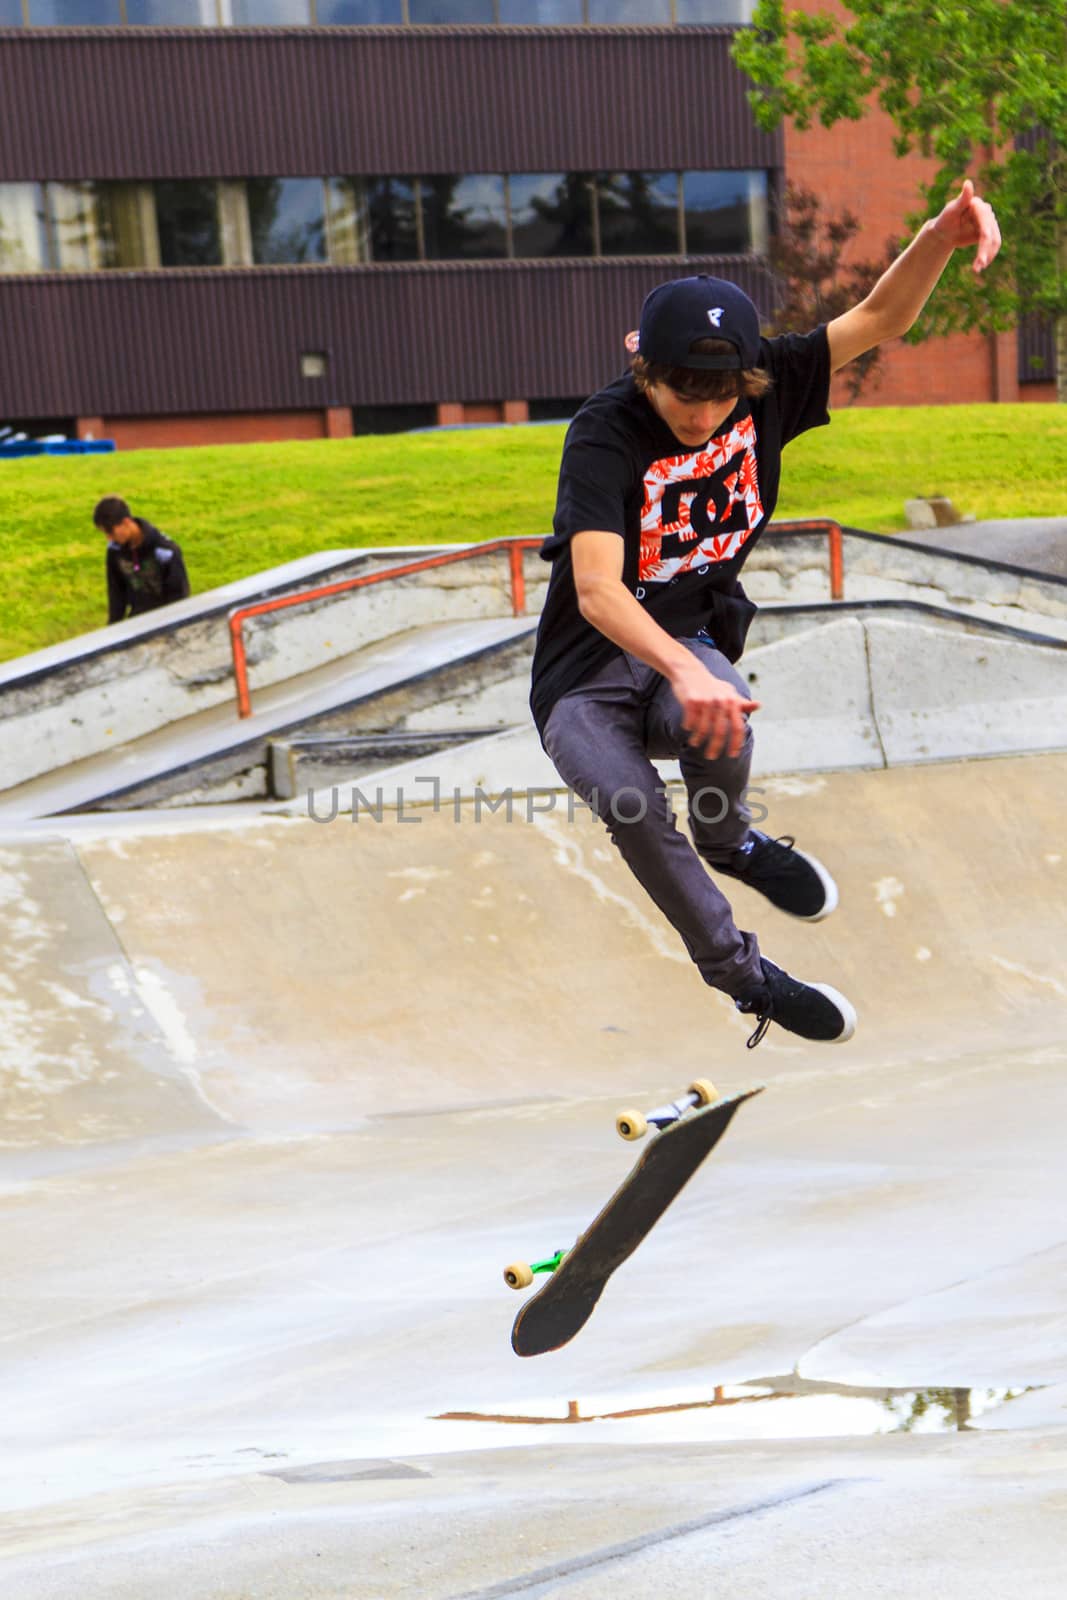 Skateboarding by Imagecom